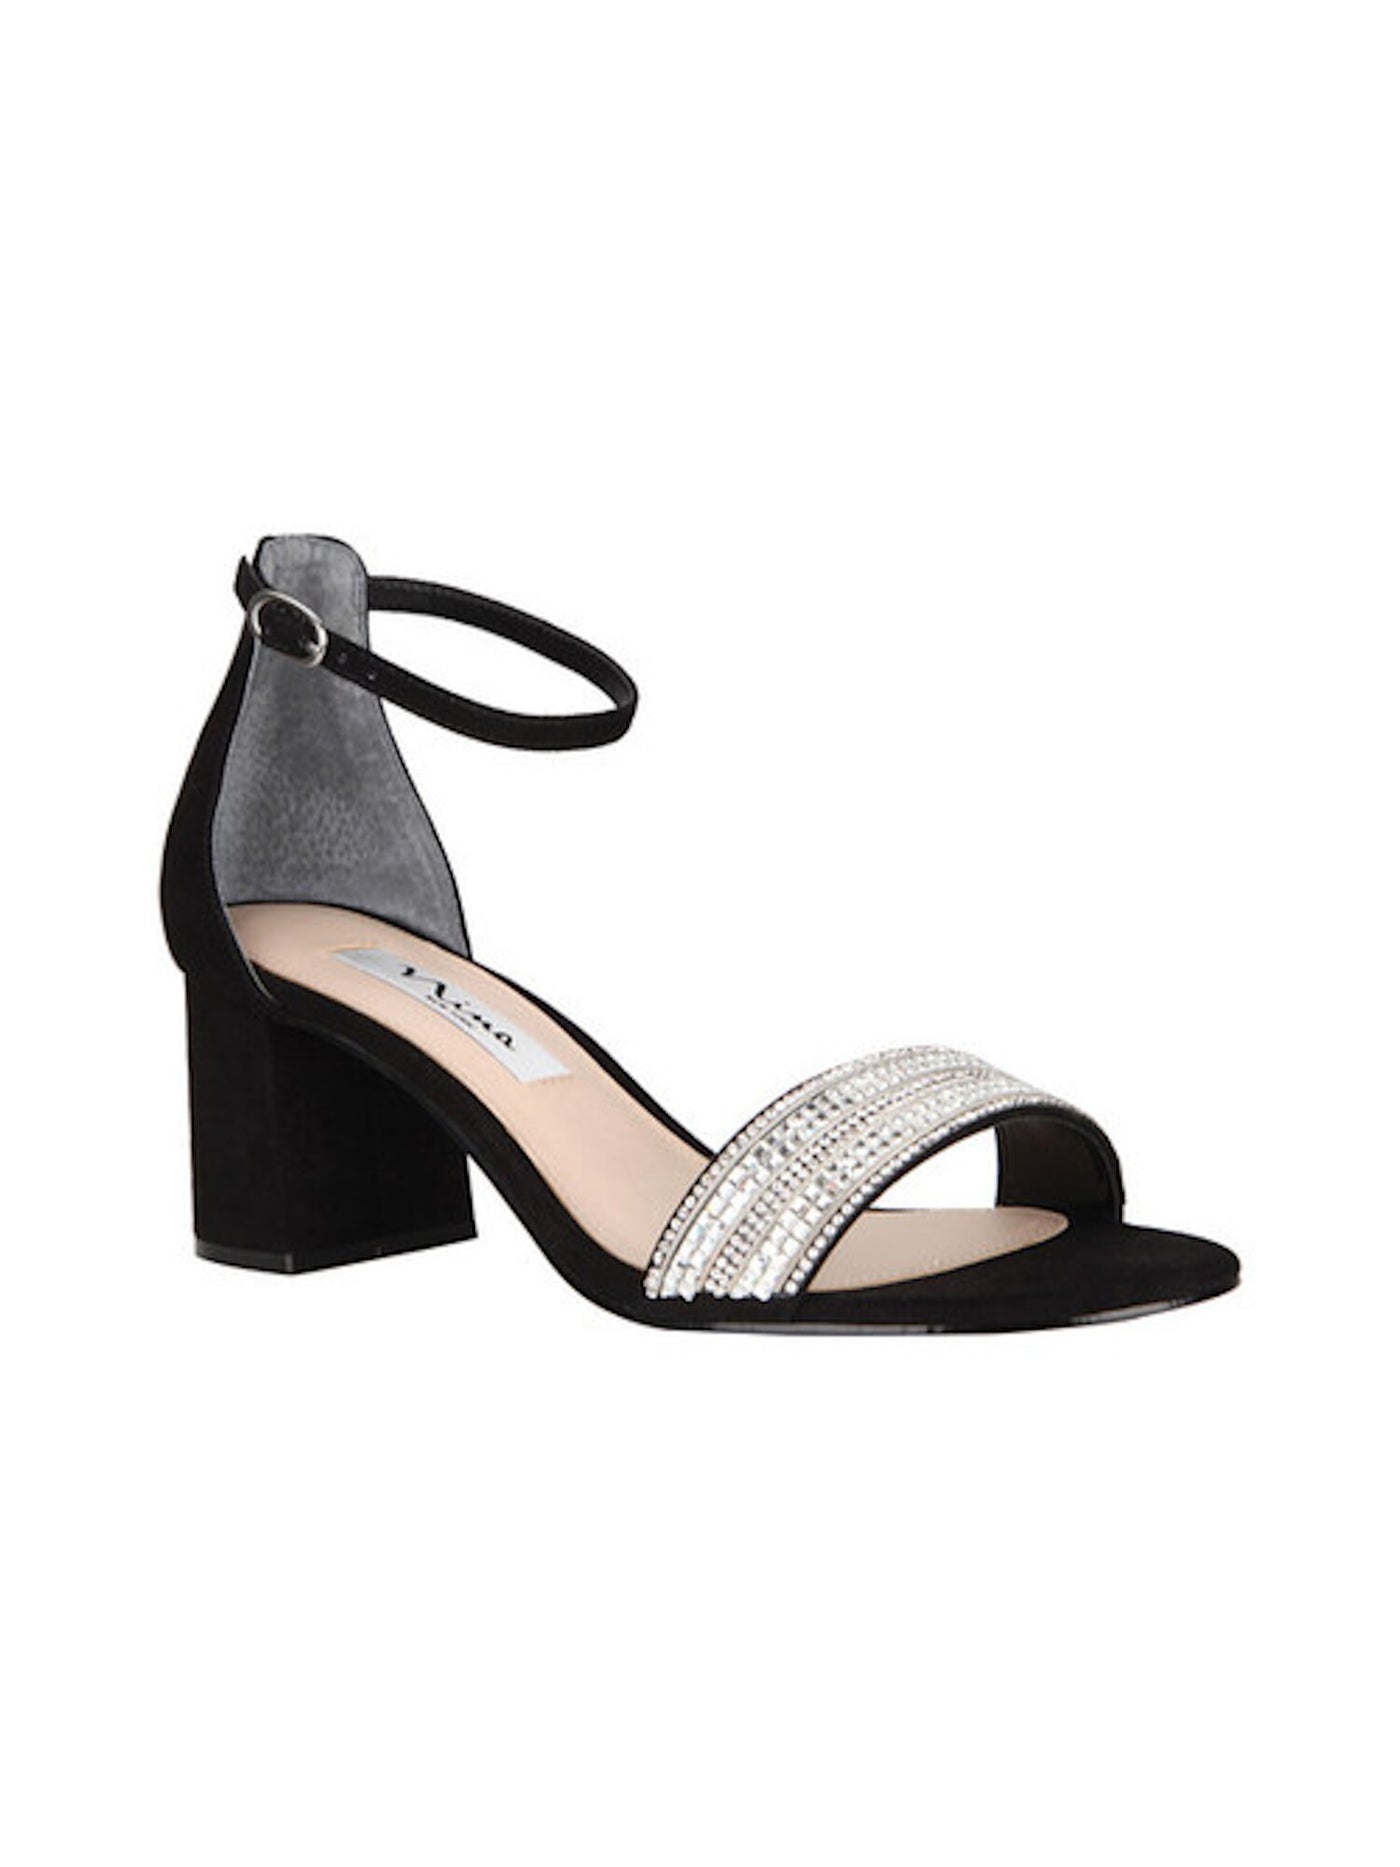 NINA Womens Black Ankle Strap Embellished Elenora Round Toe Block Heel Buckle Dress Sandals Shoes 10 M